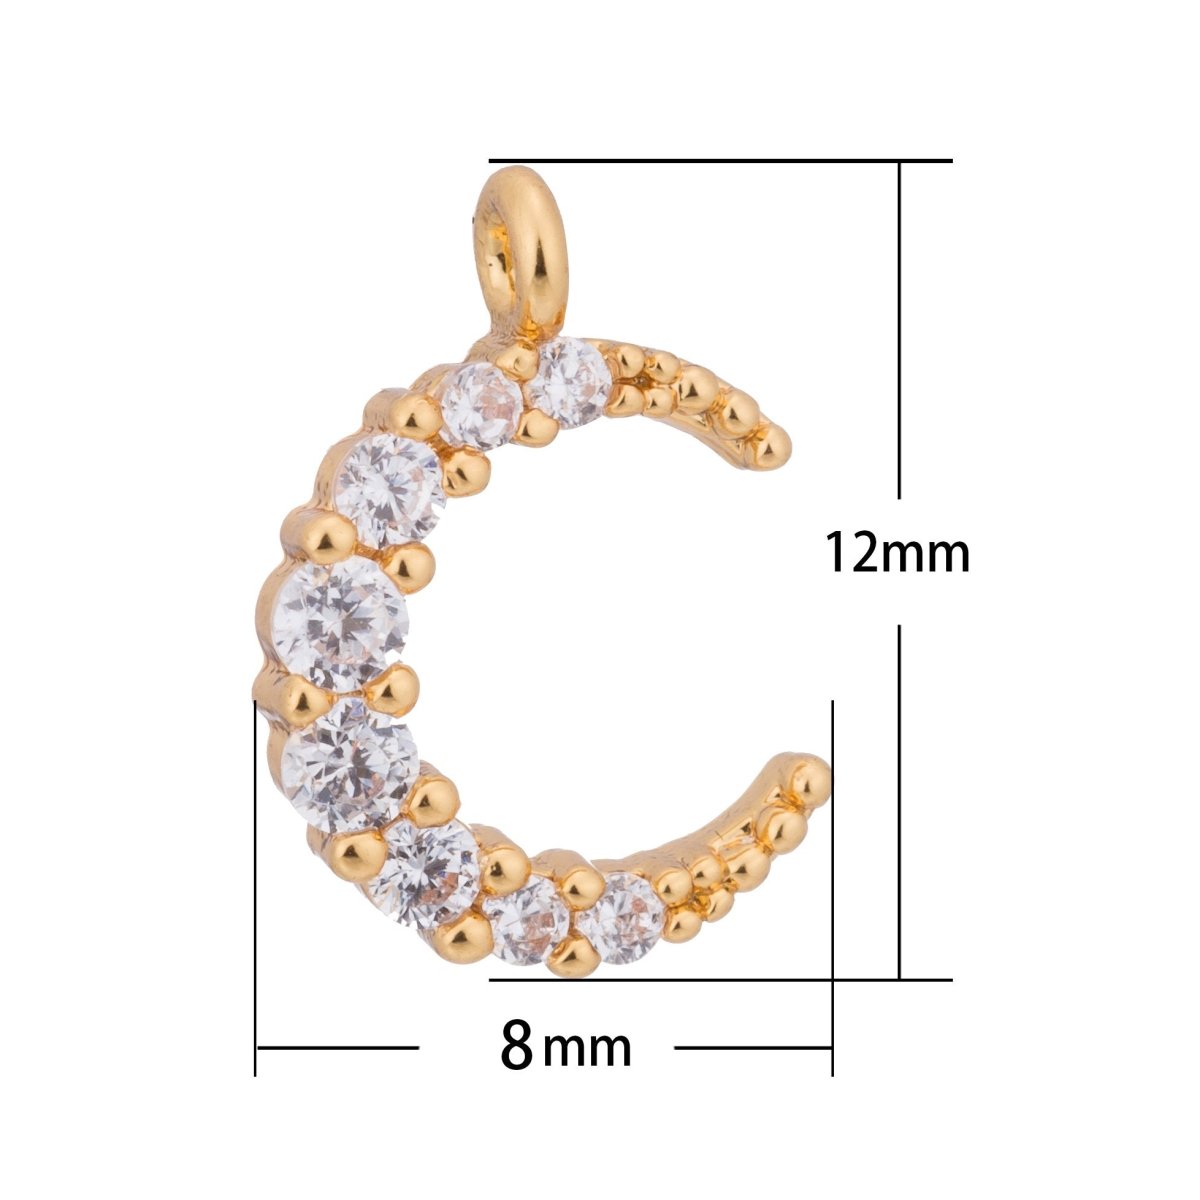 Gold Moon Beam, Moonlight, Crescent, Wish, Dream Celestial Craft Cubic Zirconia Bracelet Charm Bead Findings Pendant For Jewelry Making, CHGF-202/C-177 - DLUXCA